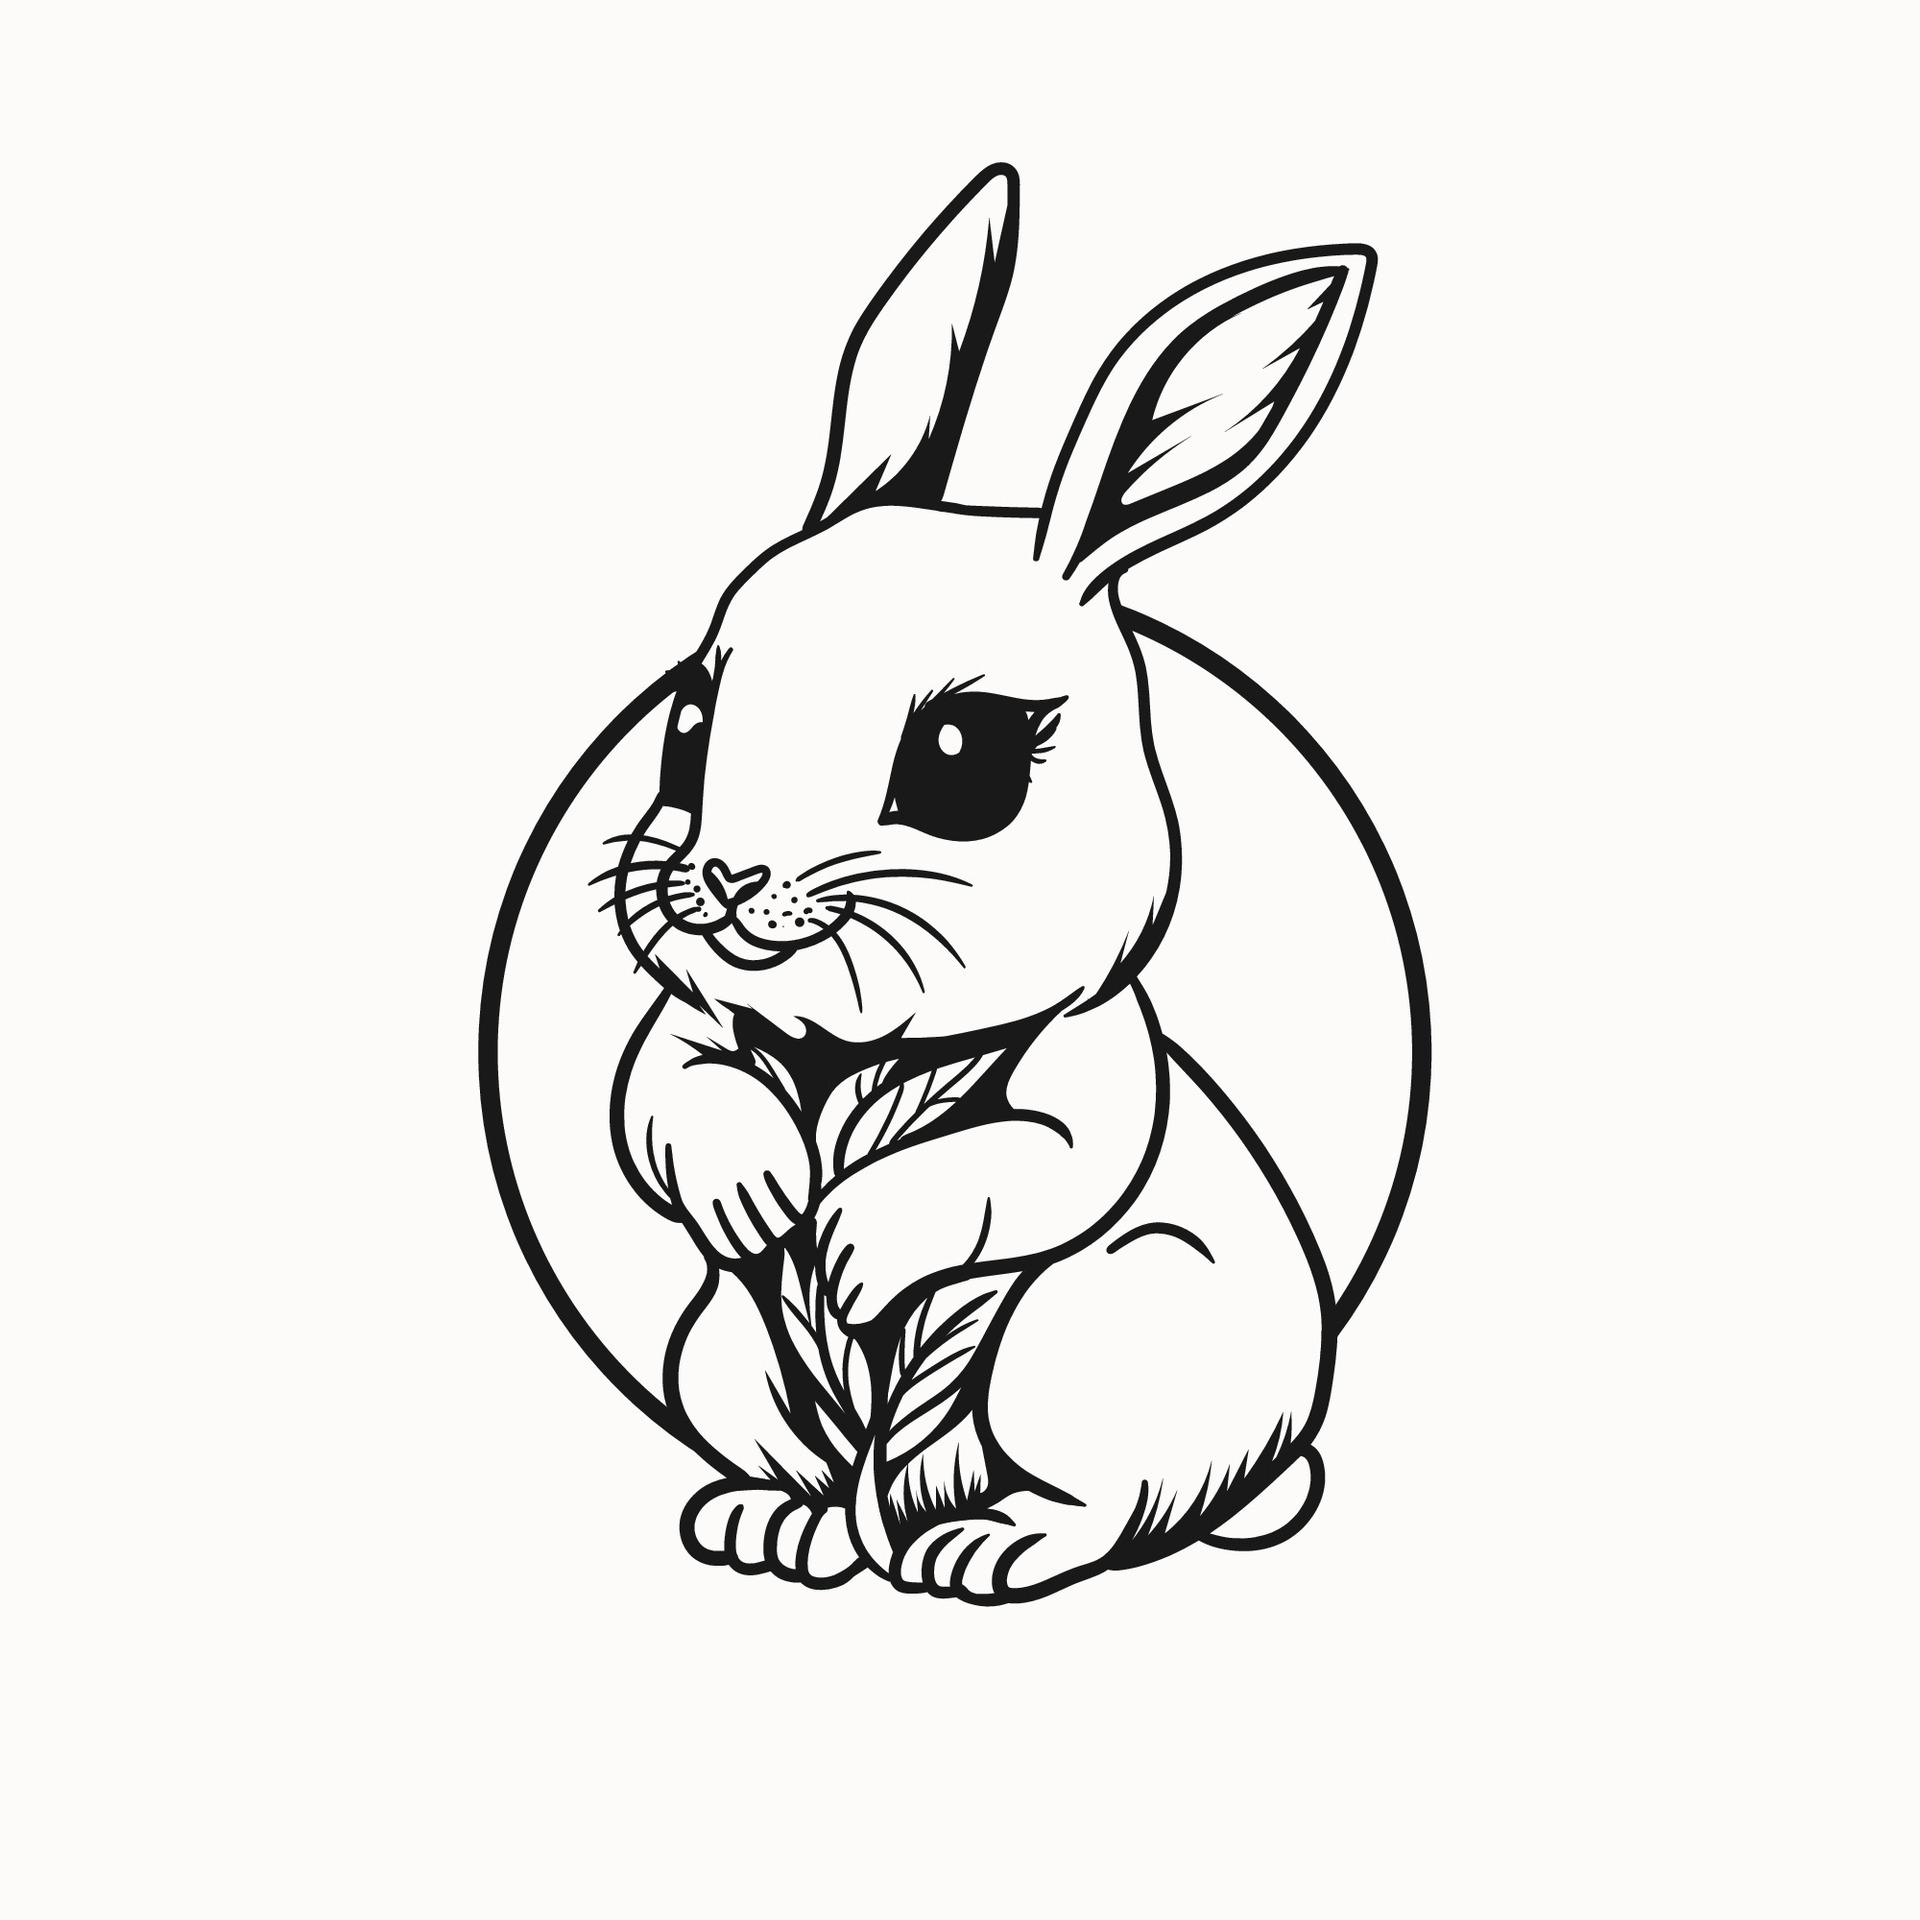 How to Draw a Bunny  StepByStep Instructions